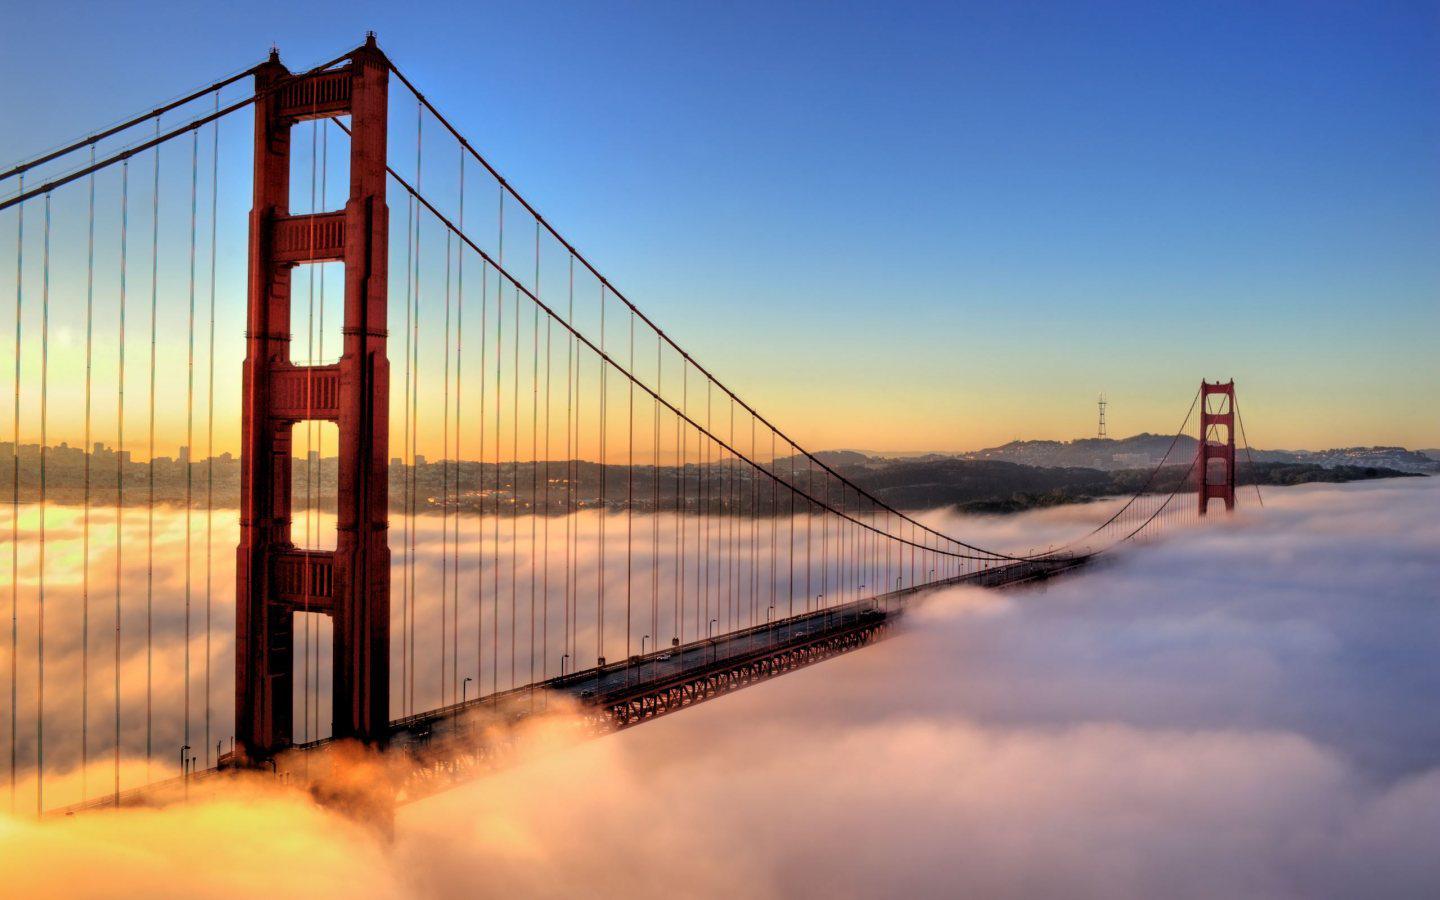 Golden Gate from San Francisco HD Wallpaper is a Beautiful Wallpaper